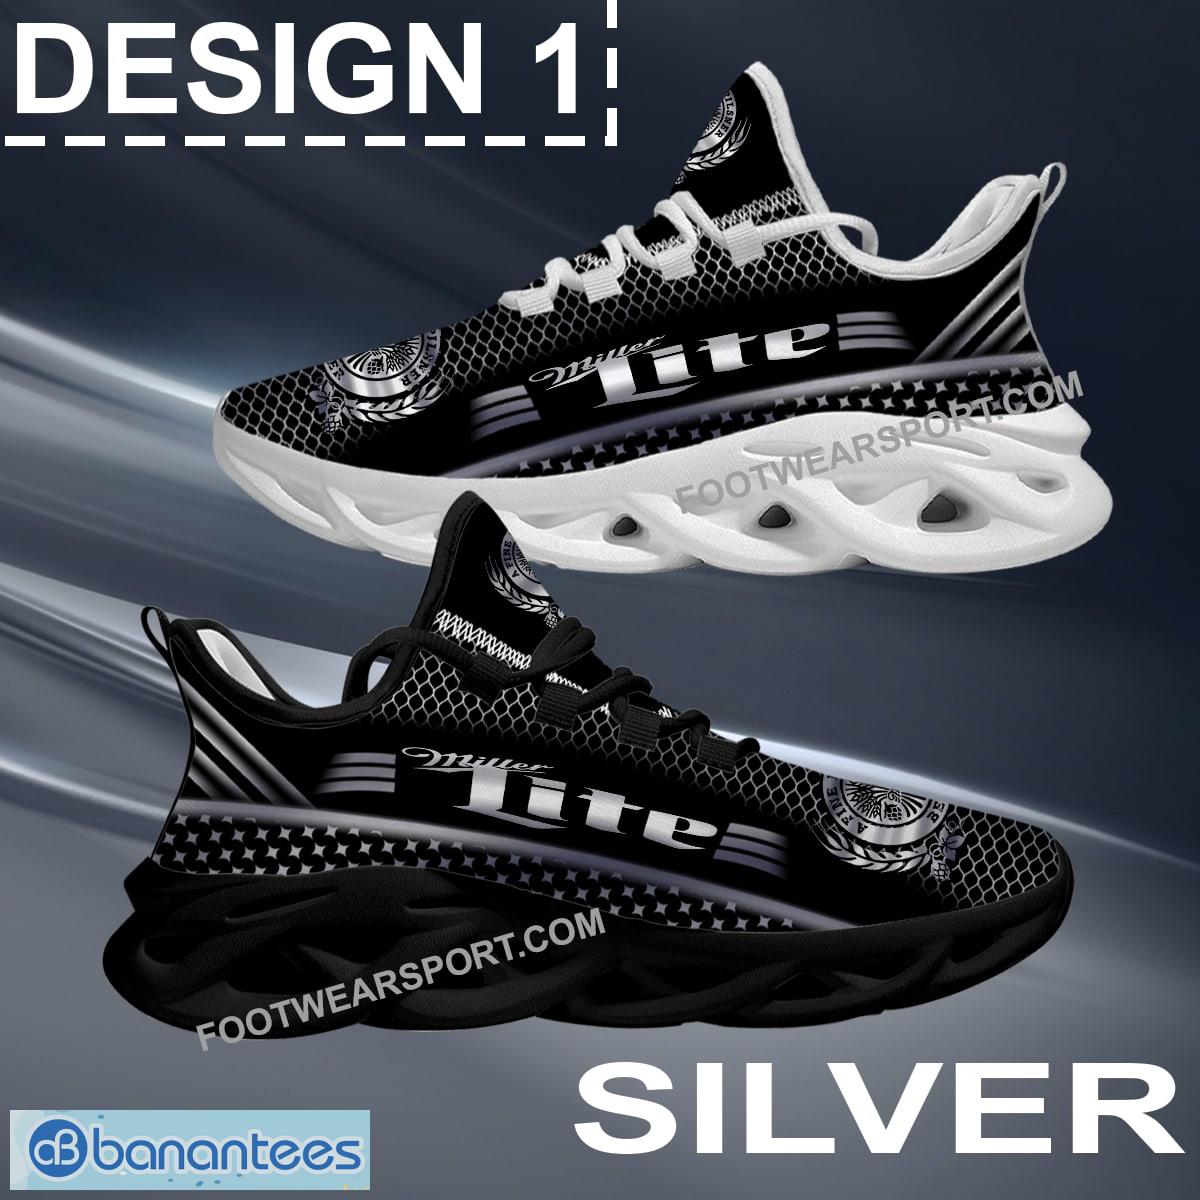 Miller Lite Max Soul Shoes Gold, Diamond, Silver All Over Print Modern Chunky Sneaker Gift - Brand Miller Lite Max Soul Shoes Style 1